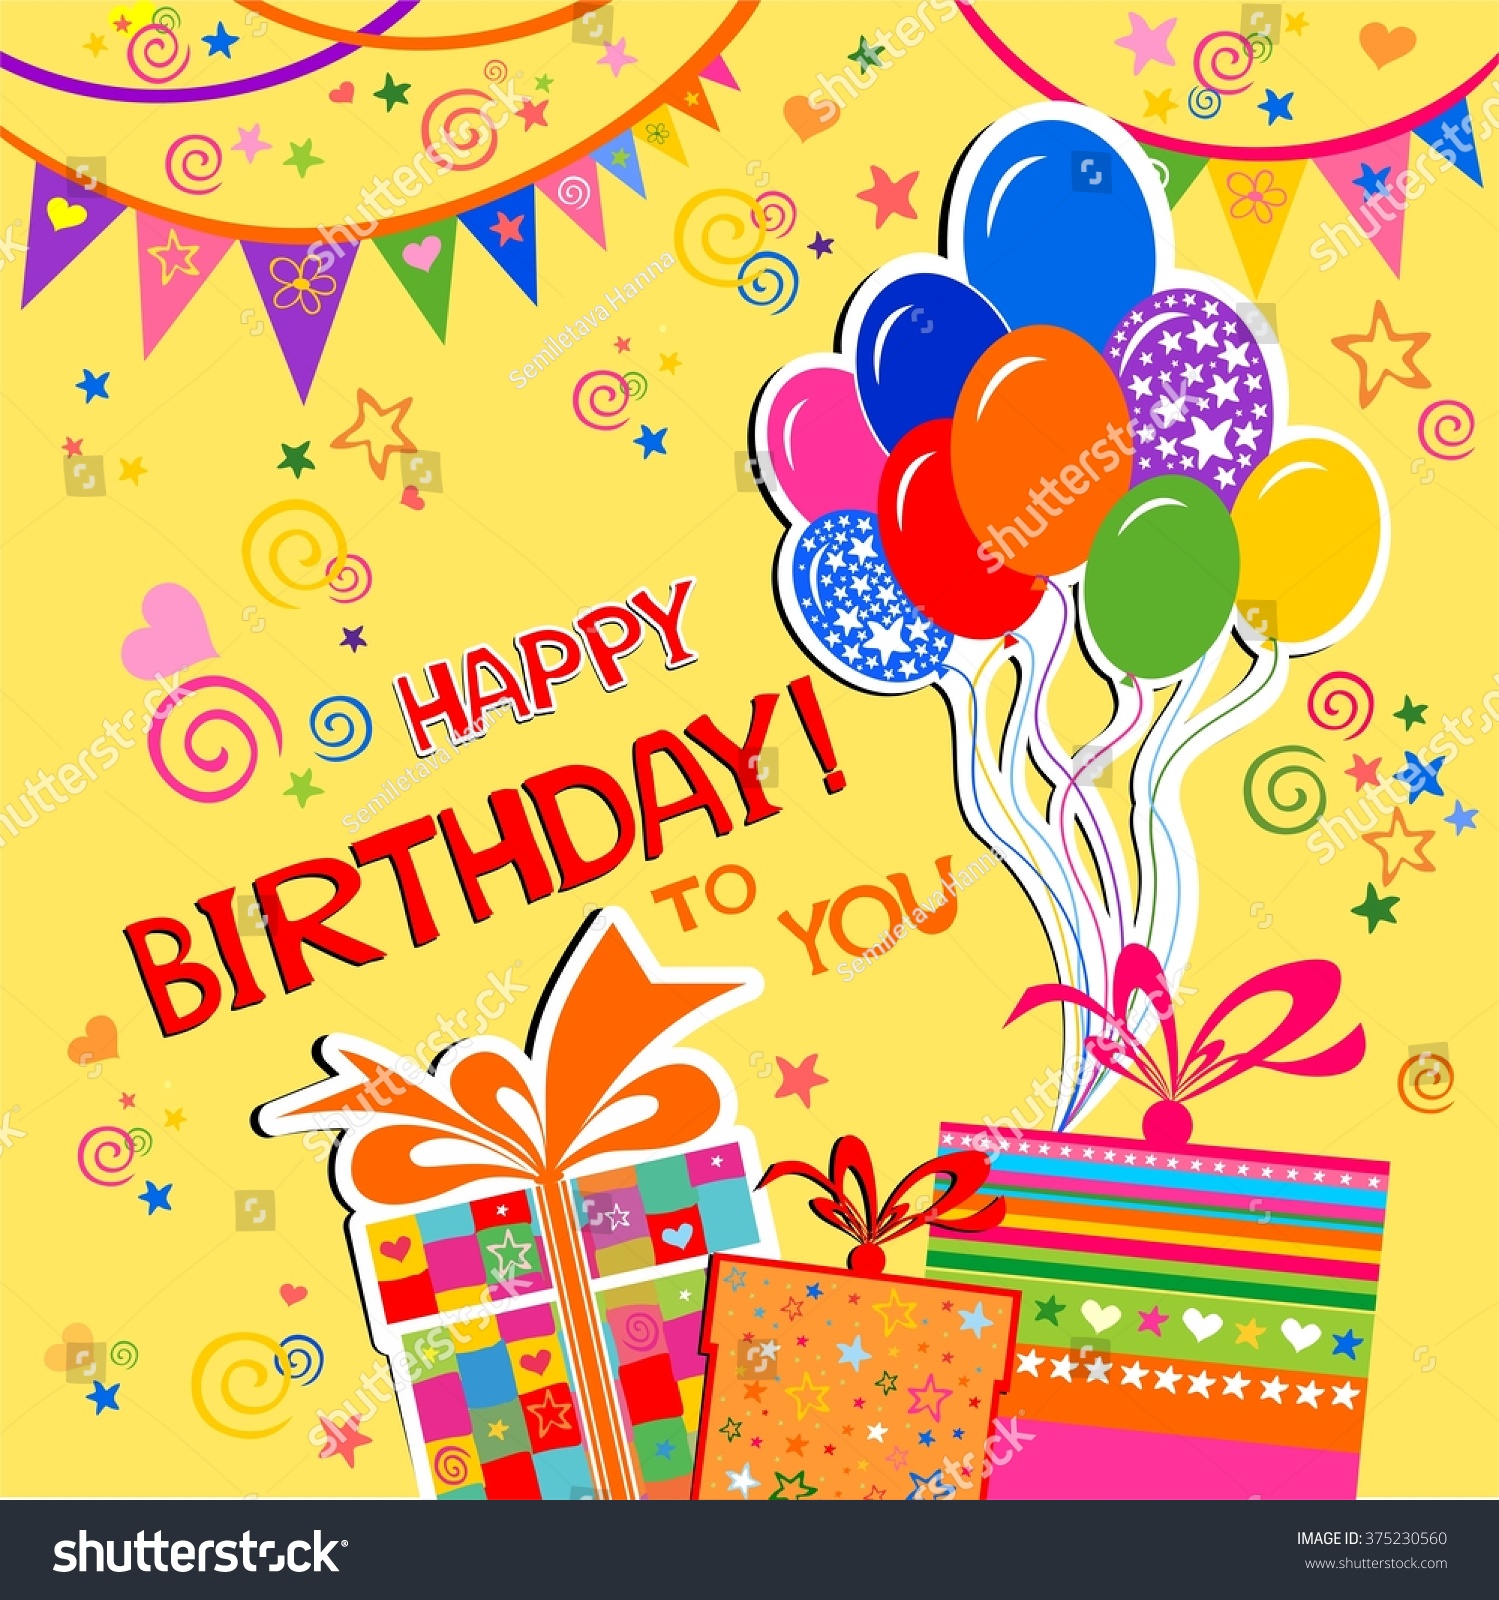 Happy Birthday To You! Birthday Card. Celebration Yellow Background ...